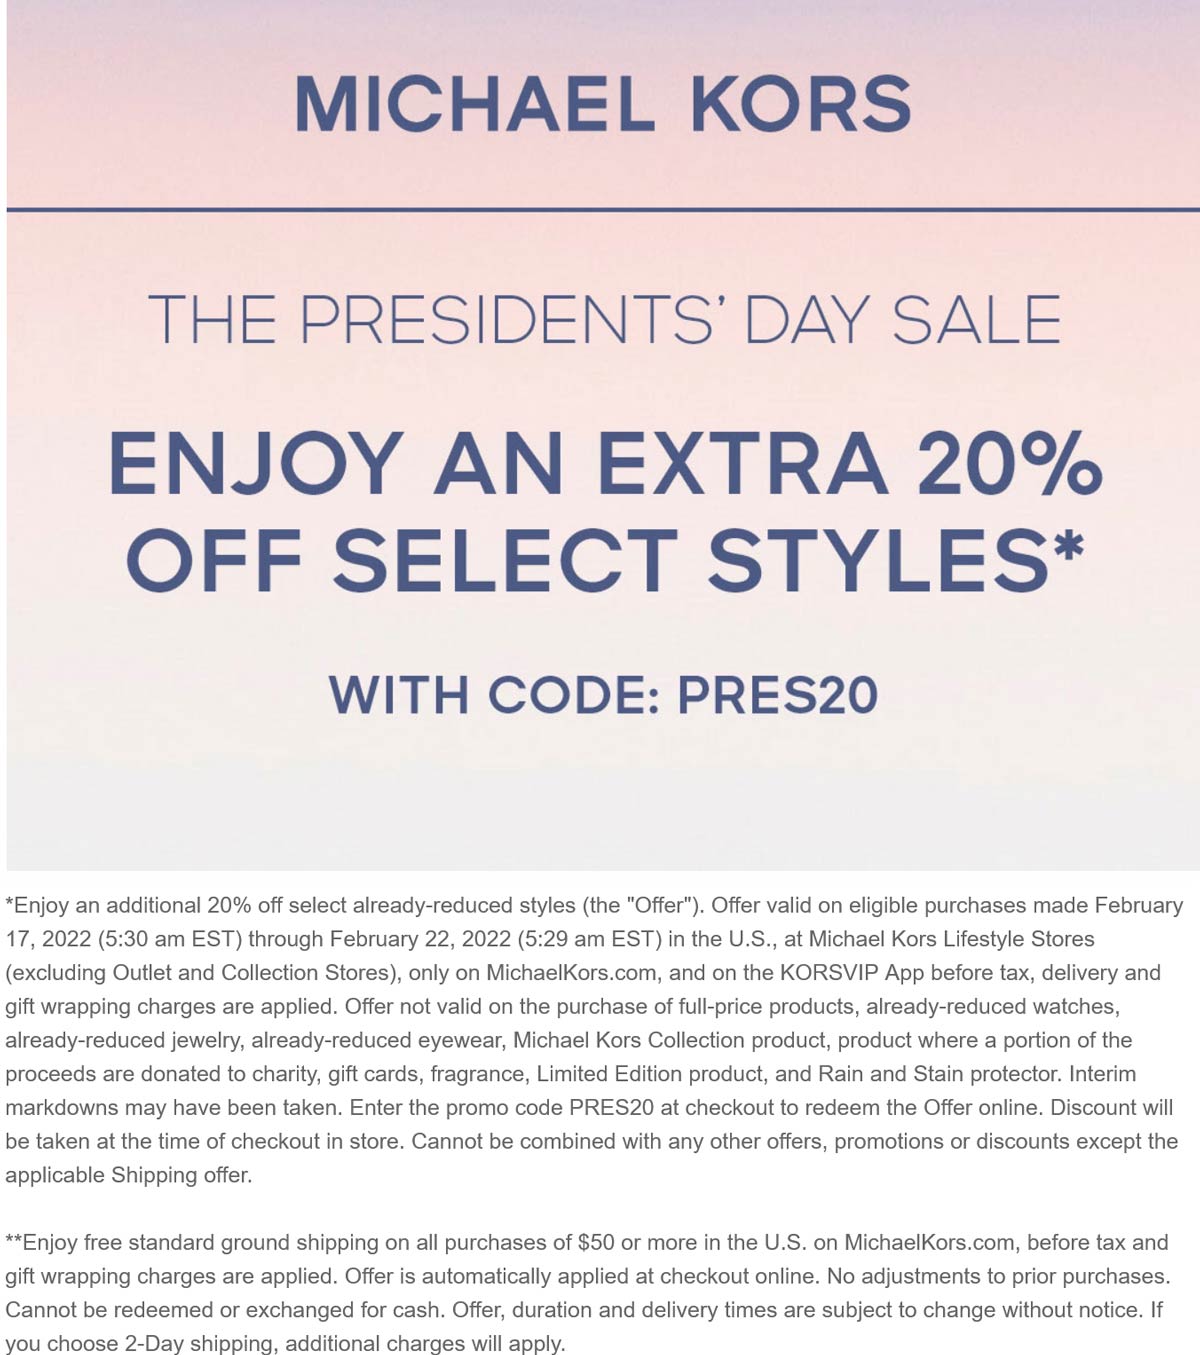 Michael Kors coupons & promo code for [December 2022]